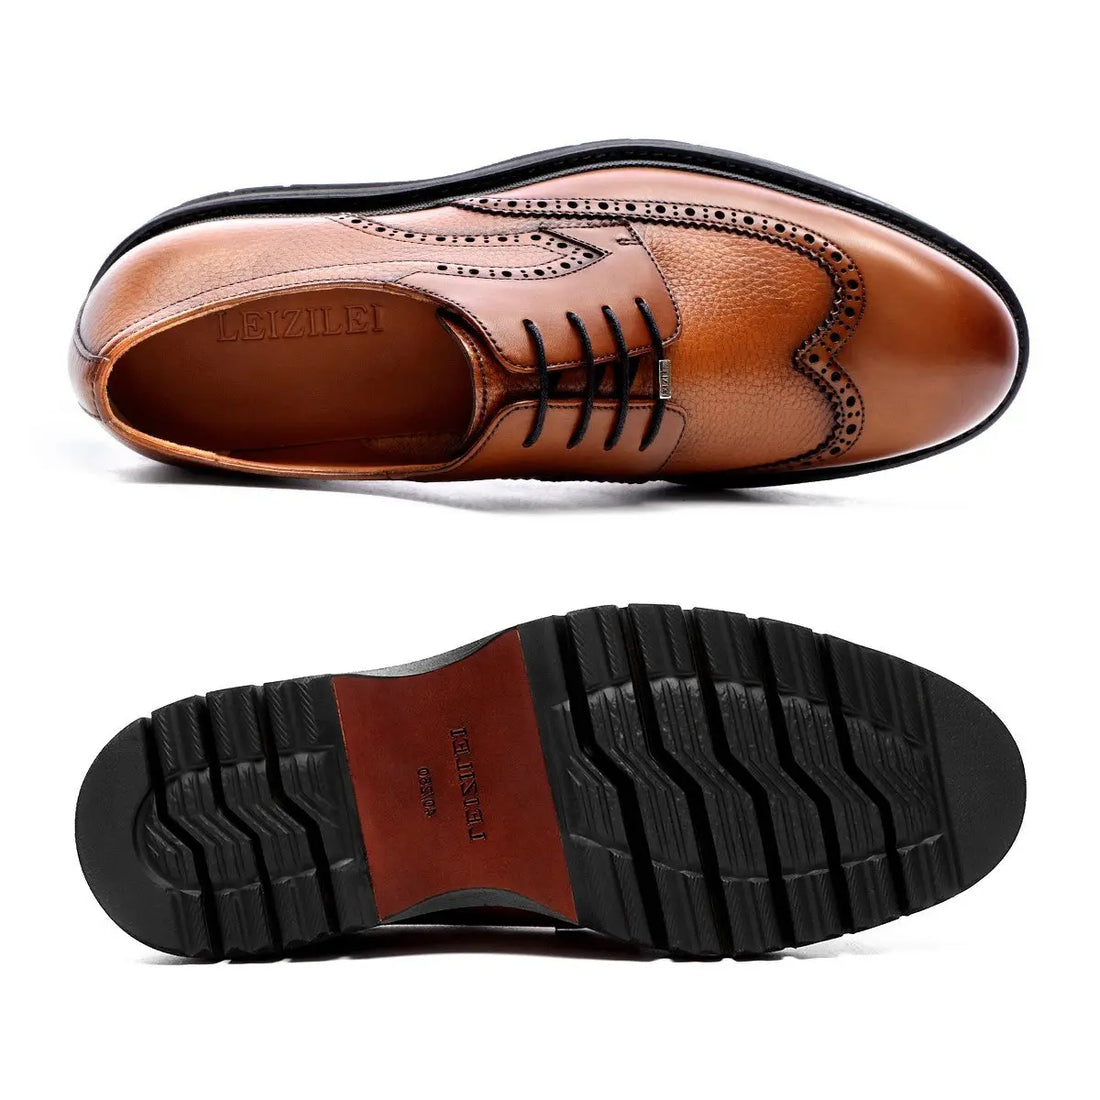 Men's Business Comfort Genuine Leather BoBo Derby Shoes 78738B LEIZILEI